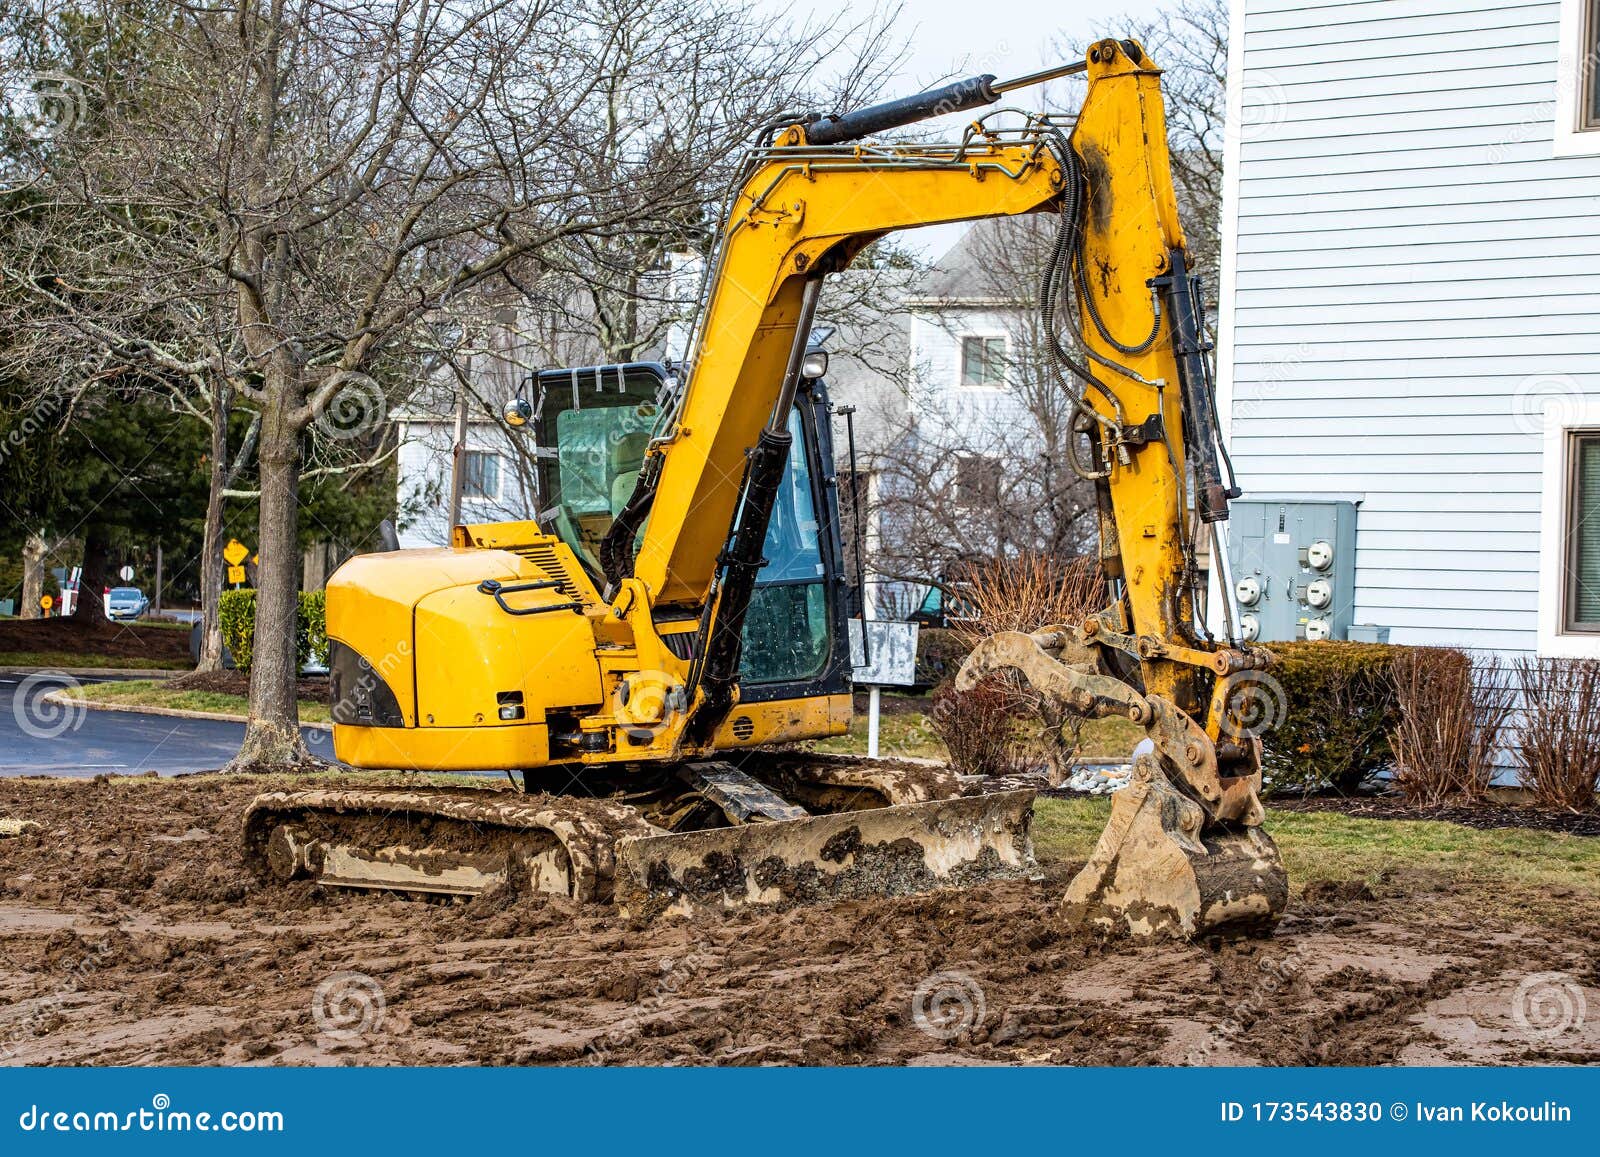 excavator bulldozer backhoe heavy machinery home improvement works